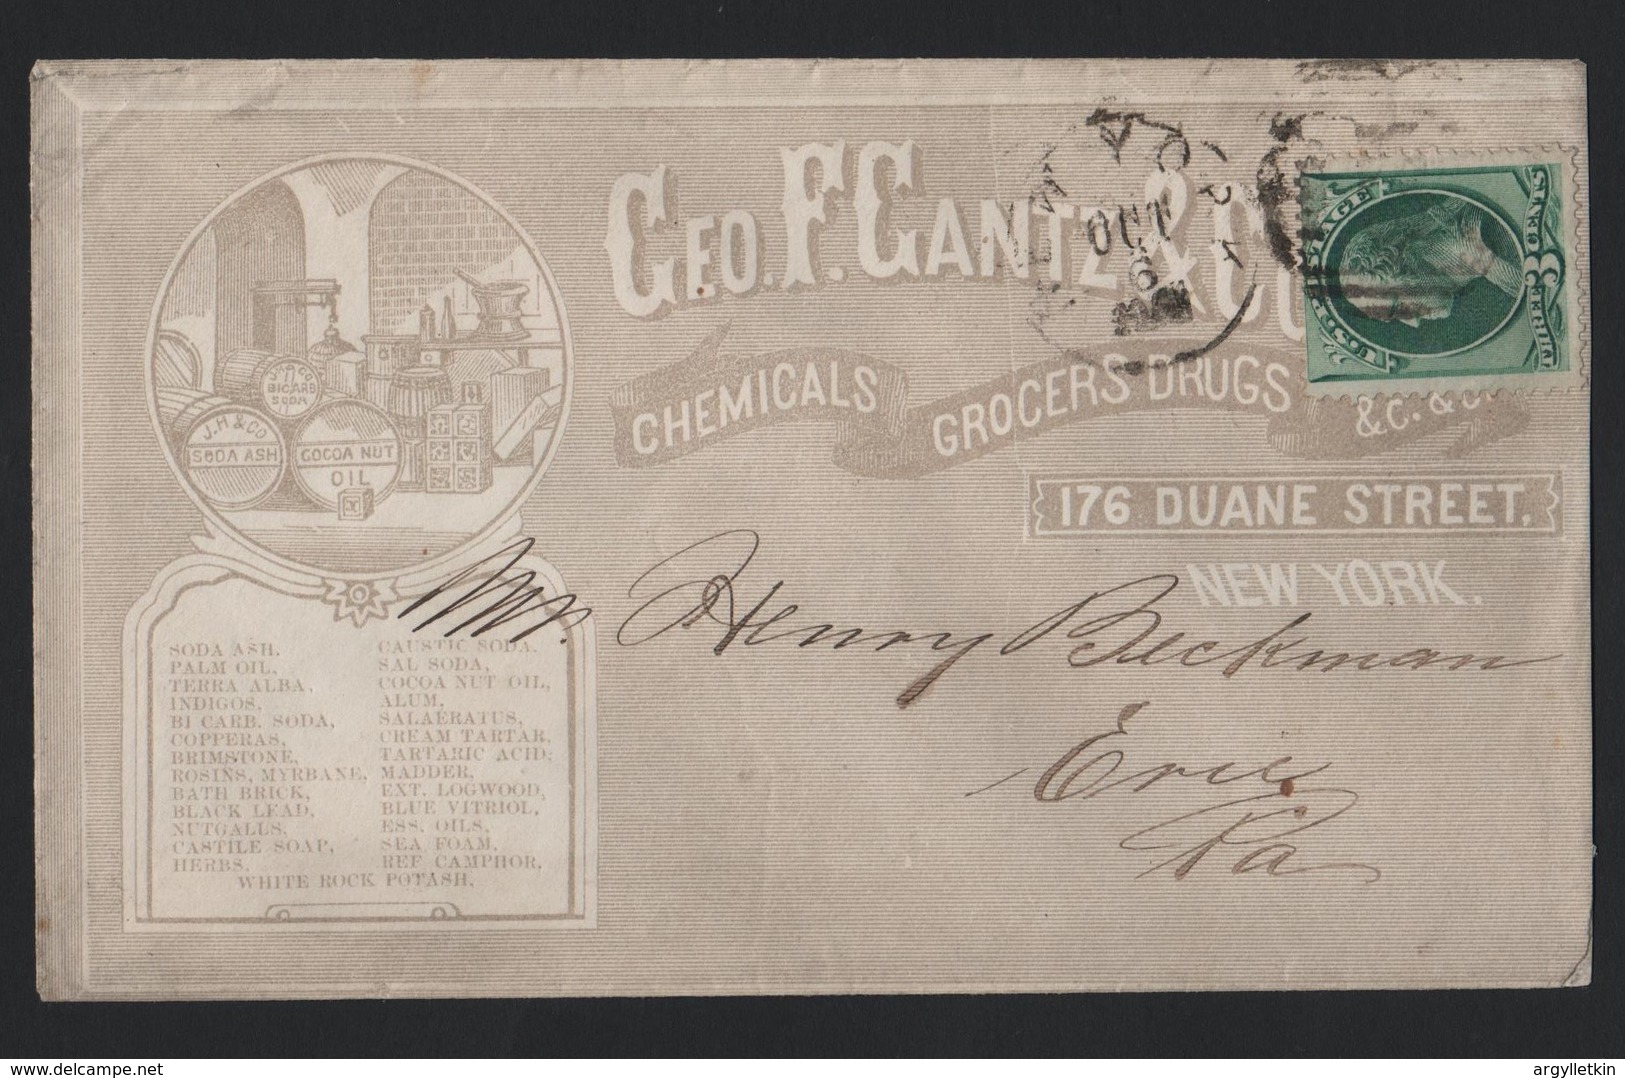 U.S.A. ADVERTISING NEW YORK GEO GANTZ CHEMICALS SODA SOAP COCONUT OIL 1870 - Cartes Souvenir